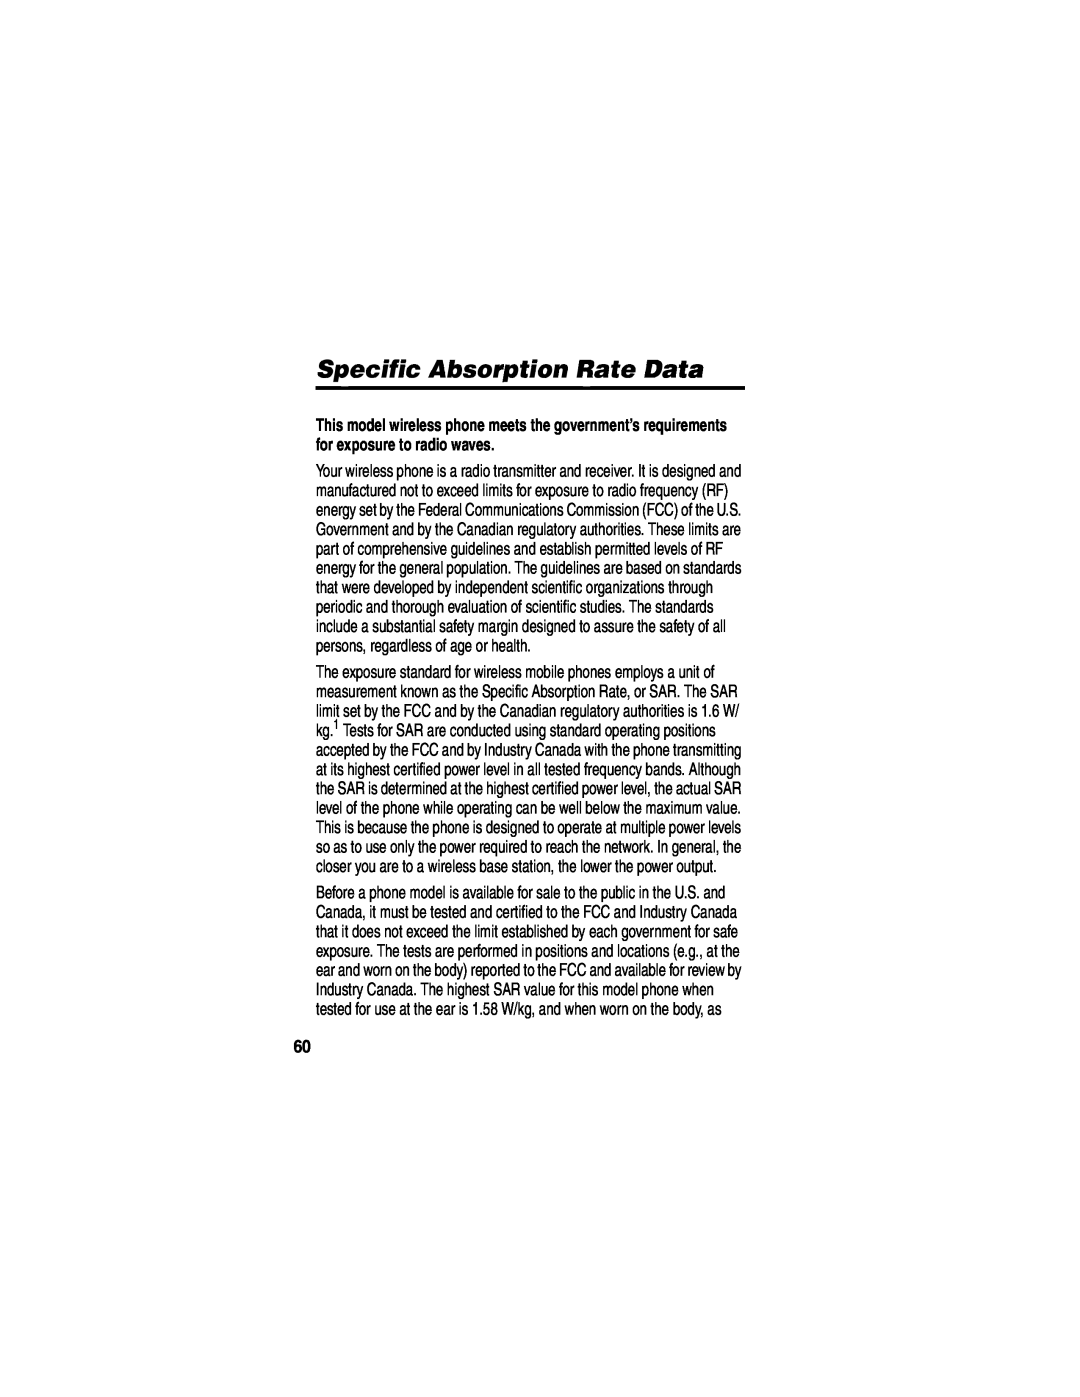 Motorola CDMA, C341a manual Specific Absorption Rate Data 